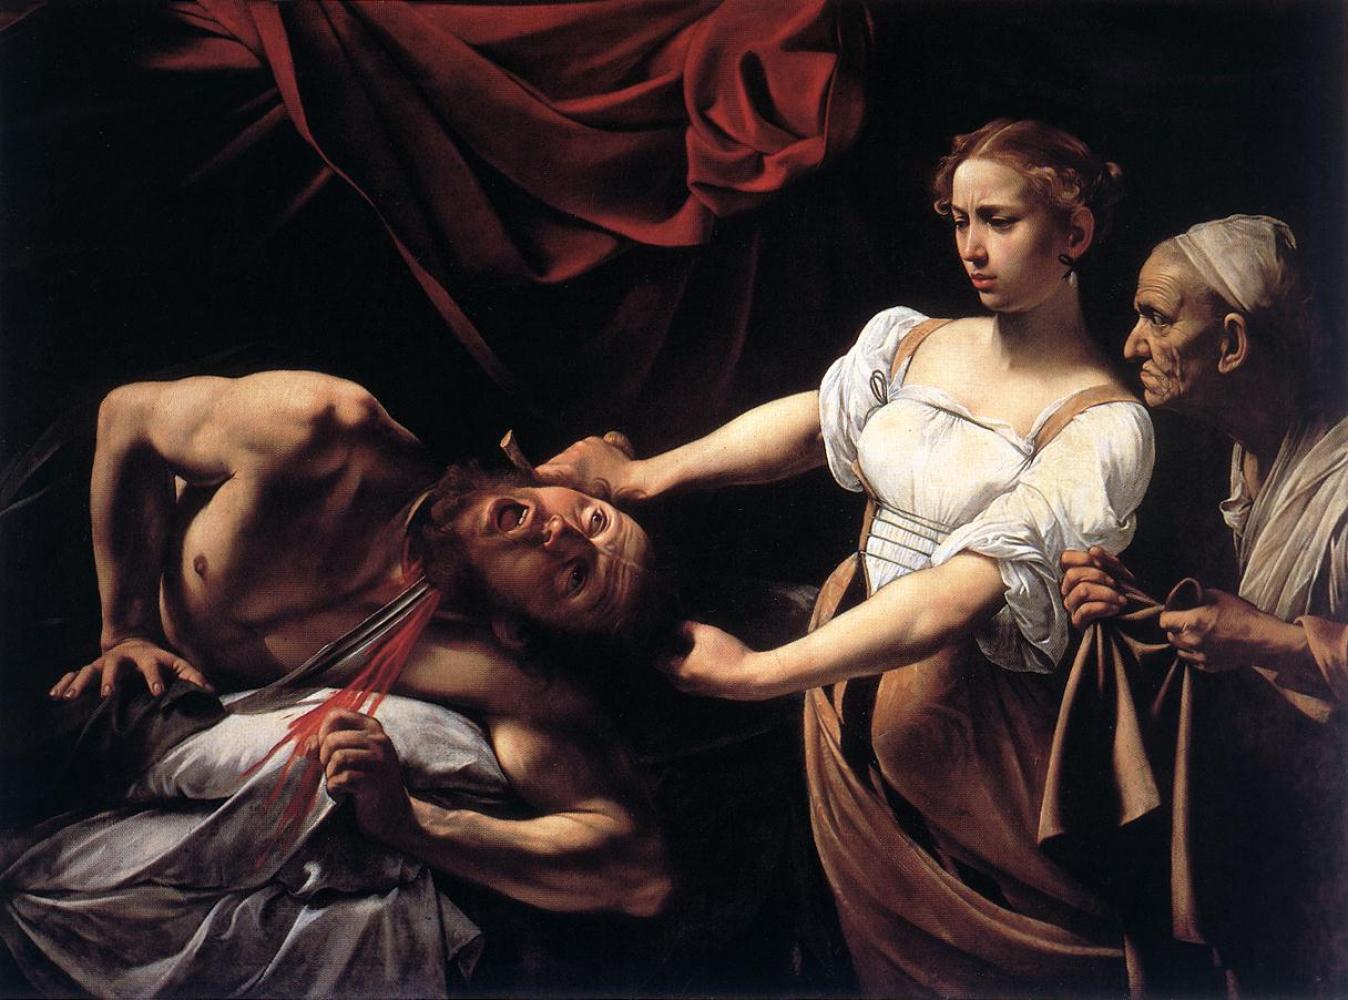 Caravaggio "Judith und Holofernes", 1598/99 